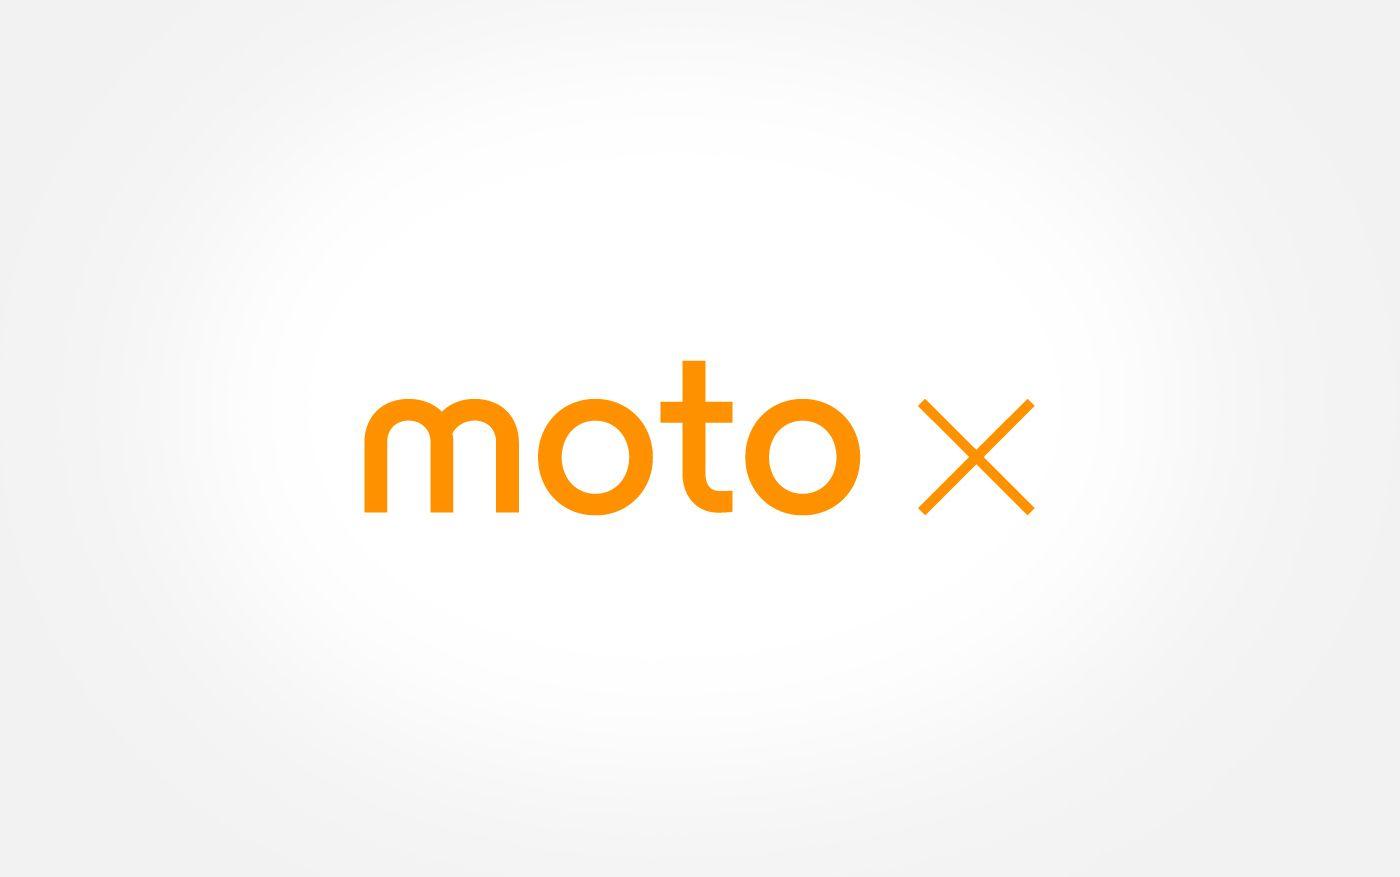 First Motorola Logo - First Image of the 4th Gen Motorola Moto X leaks | Tech Prezz